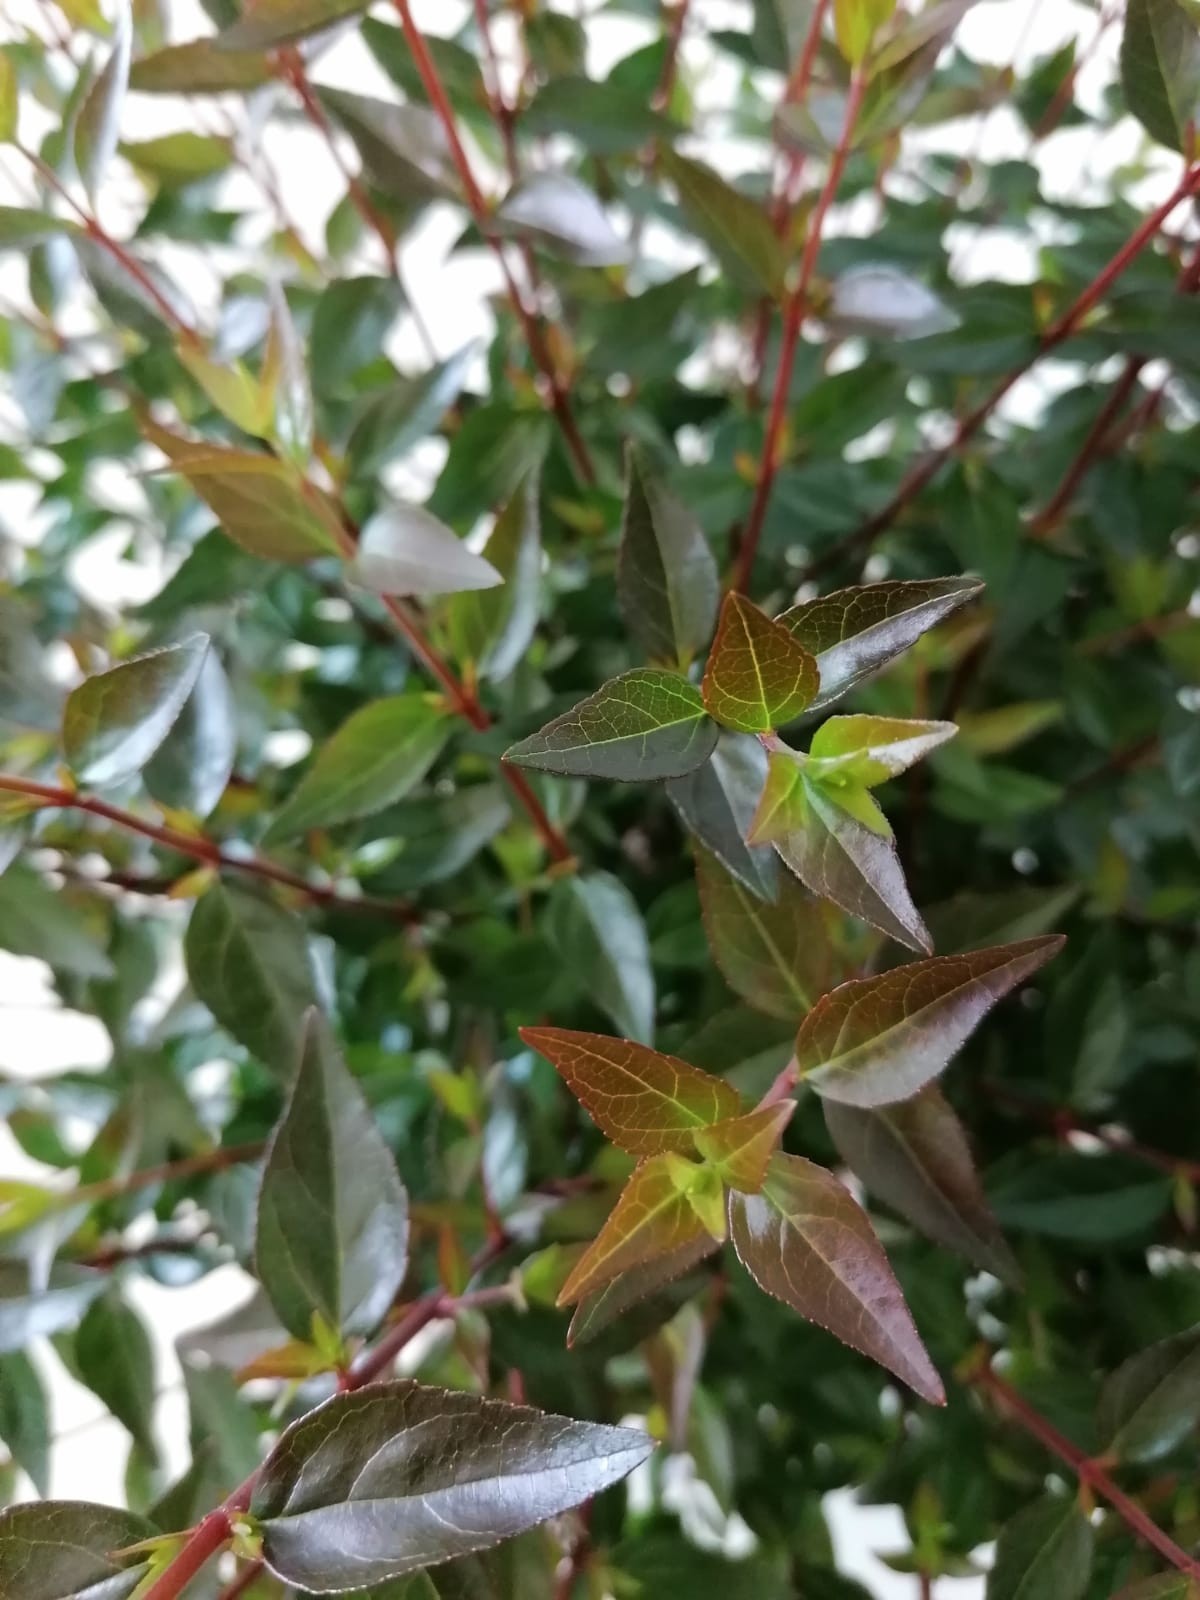 Abelia x grandiflora "Postrata" 5L 20/30